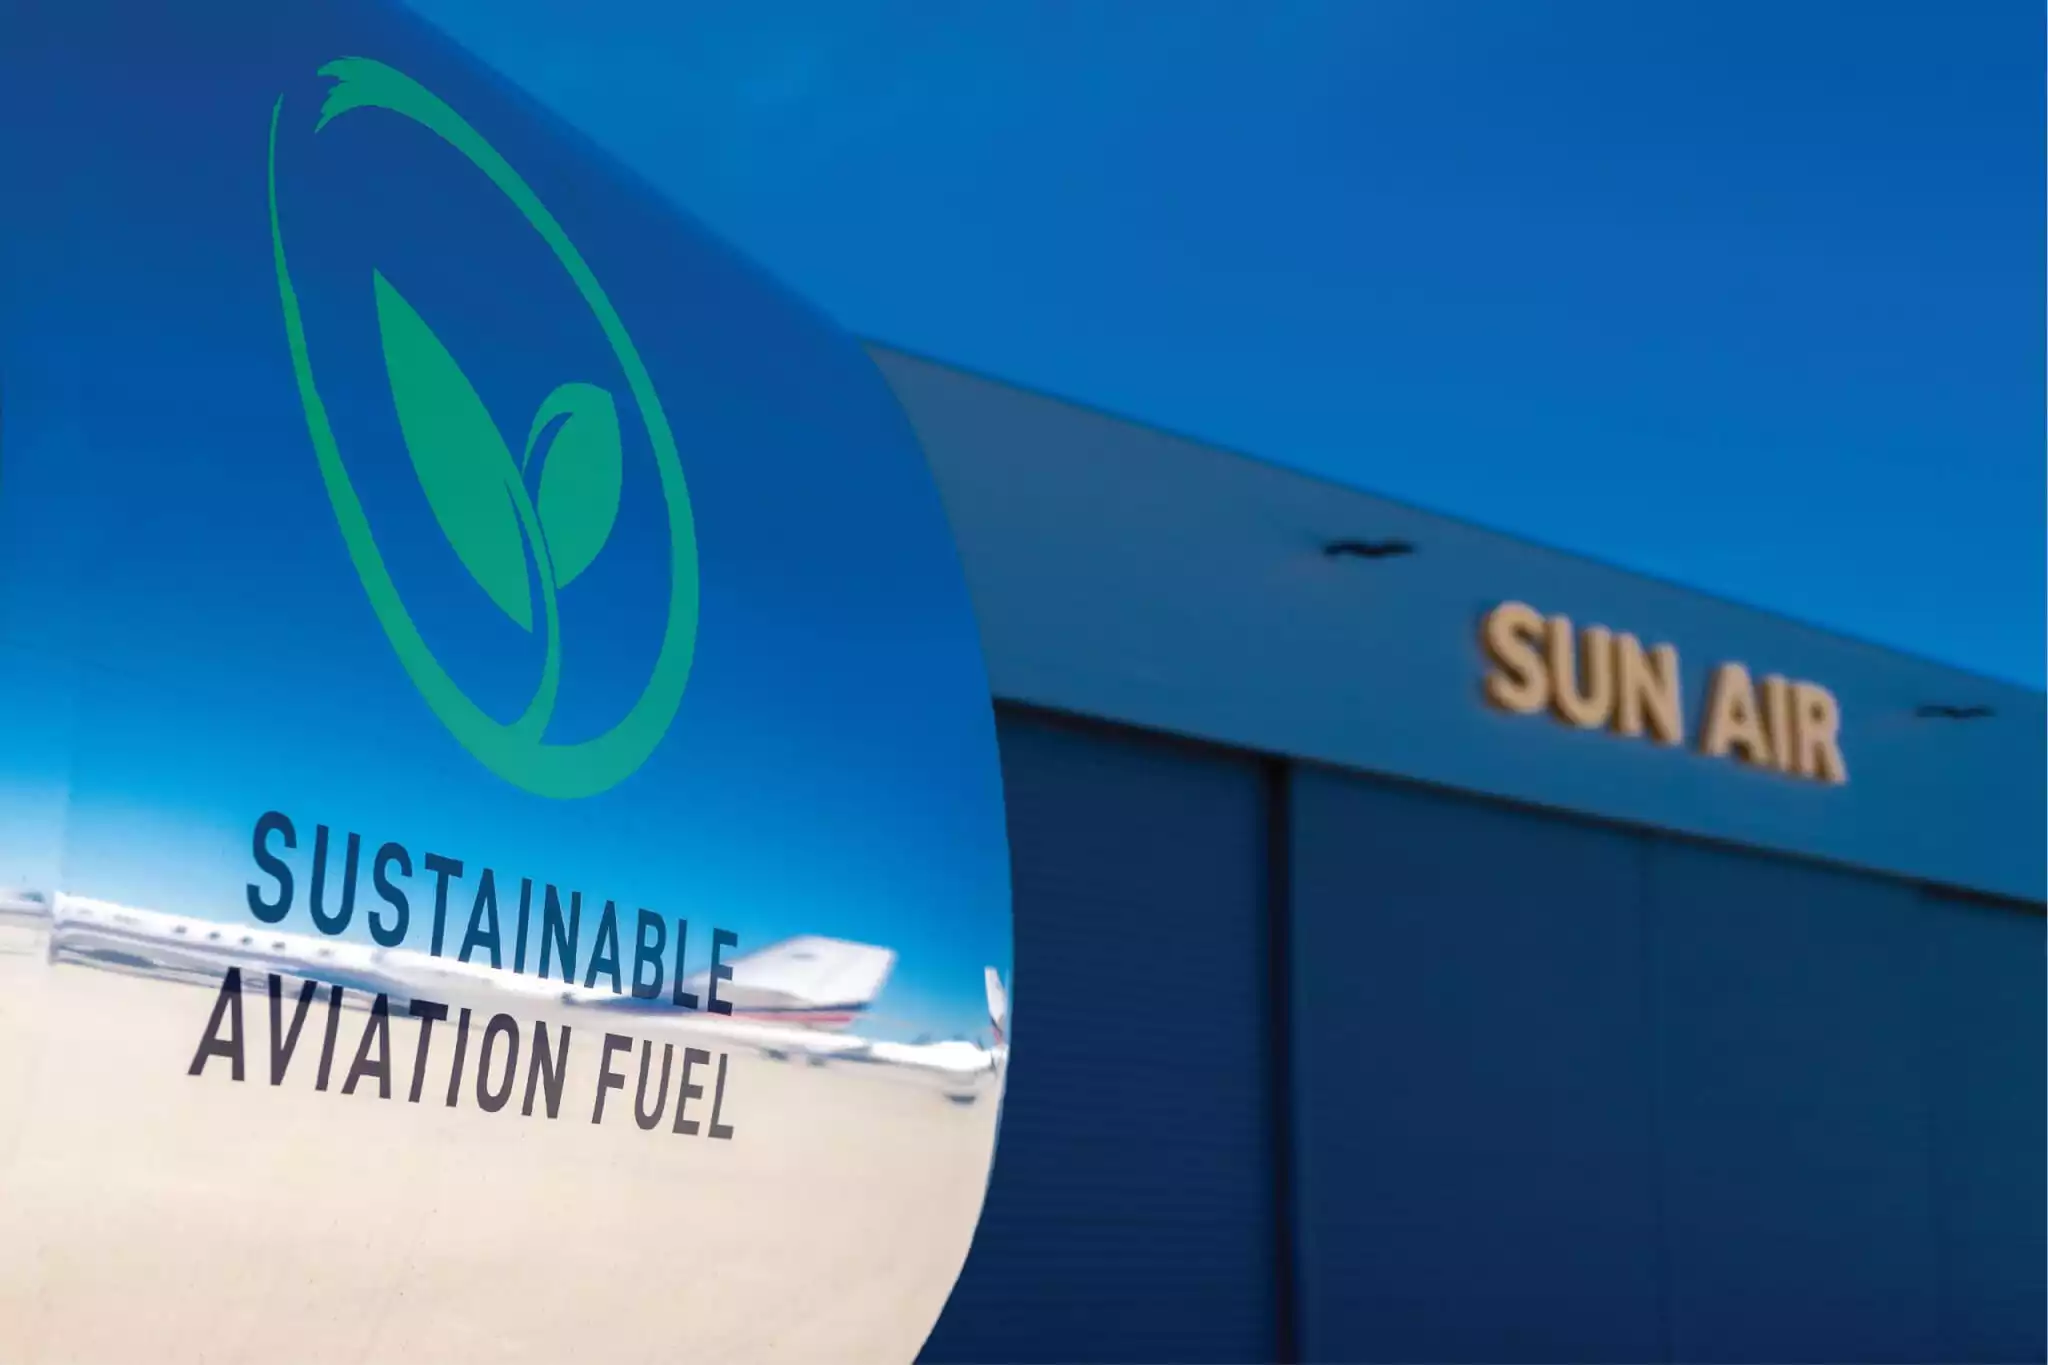 Sustainable Aviation Fuel Truck